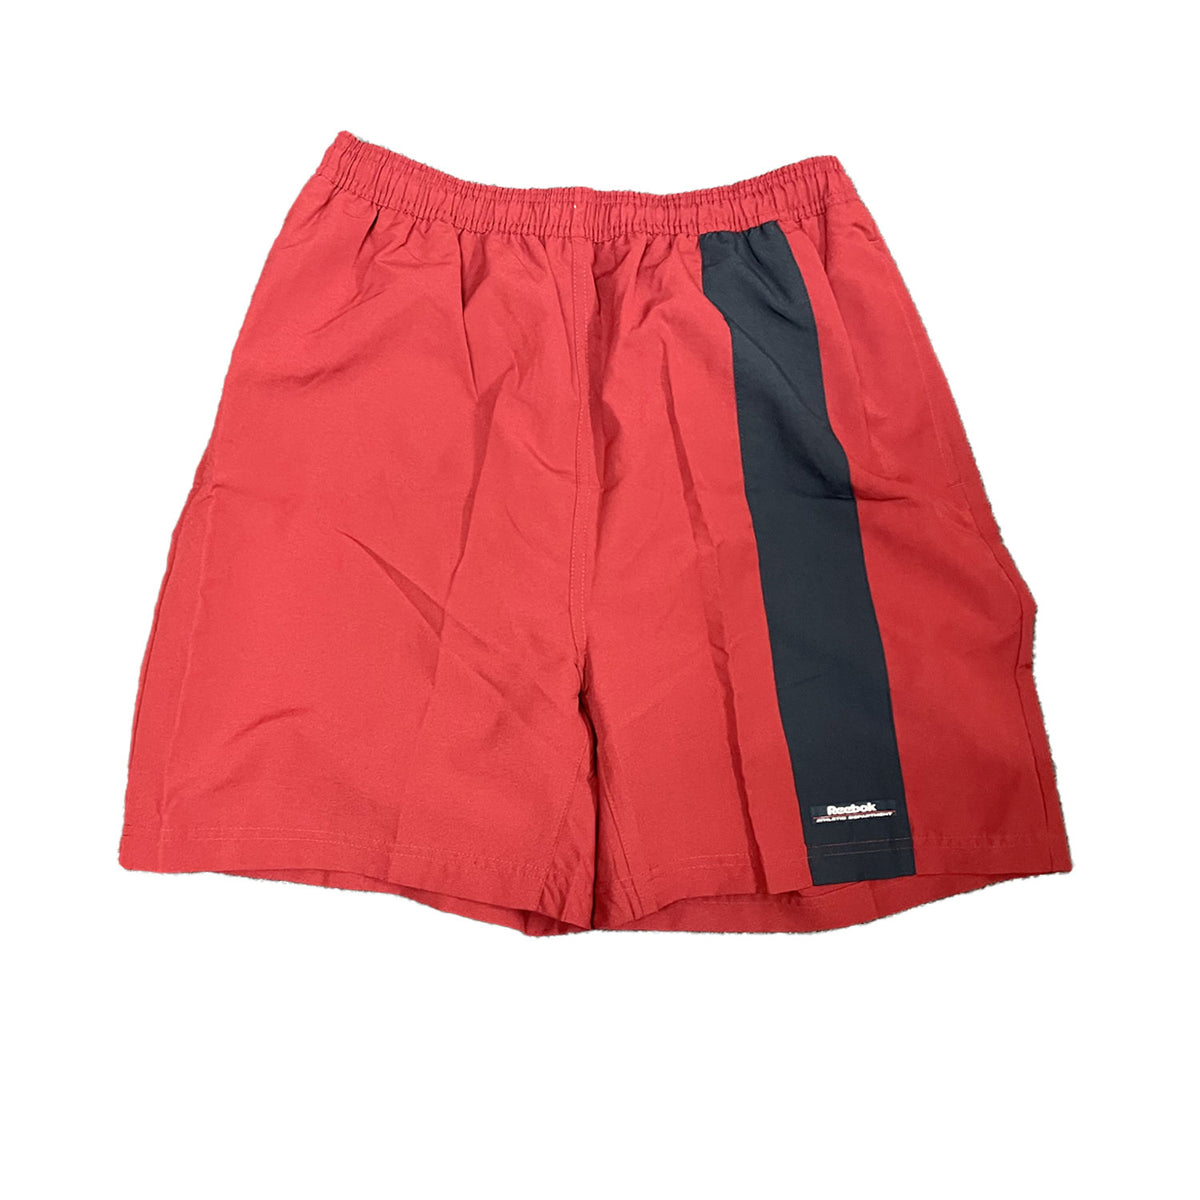 Reebok Original Clearance Contrast Athletic Shorts